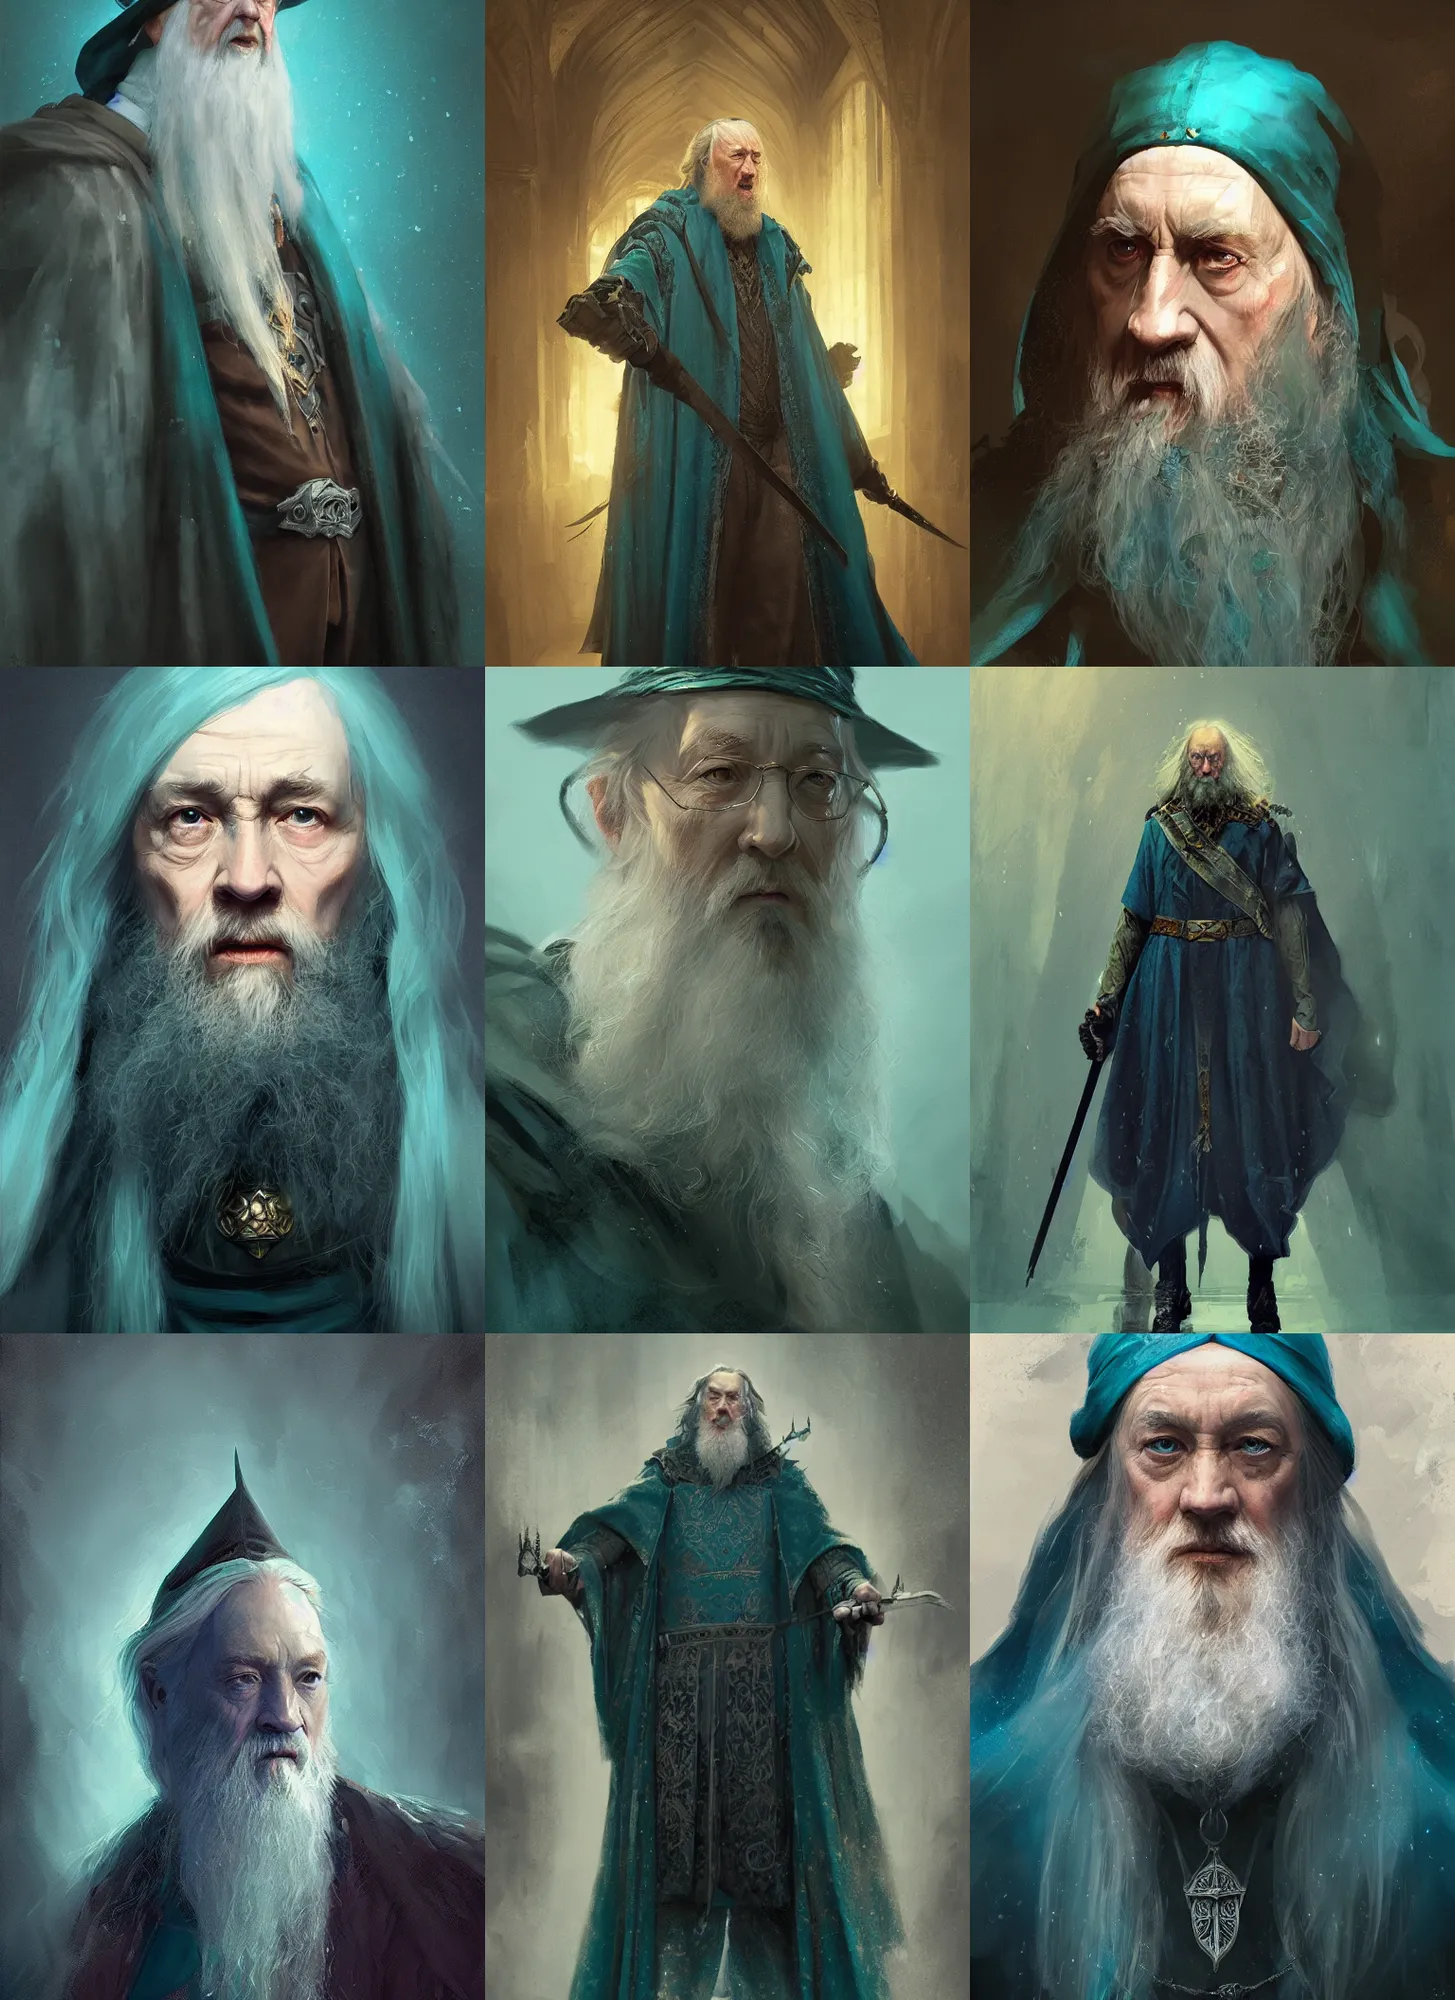 Image similar to dumbledore portrait medieval, dark, teal, intricate, highly detailed, smooth, artstation, digital illustration, ruan jia, mandy jurgens, rutkowski